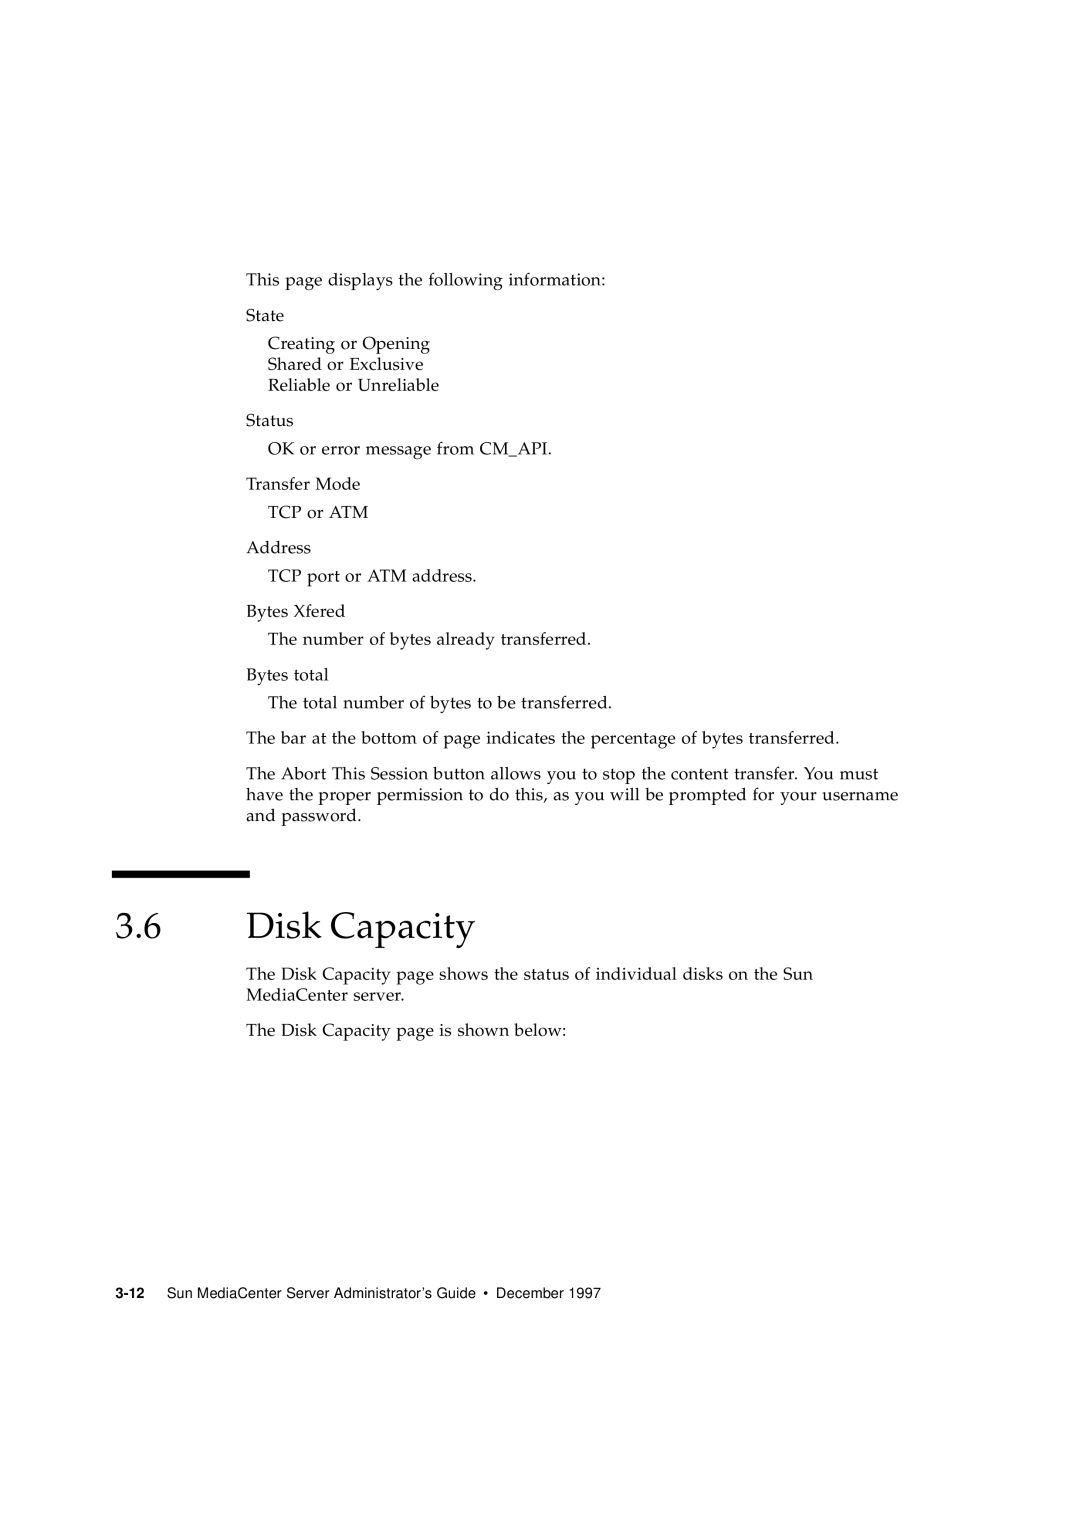 Sun Microsystems 2.1 manual Disk Capacity 